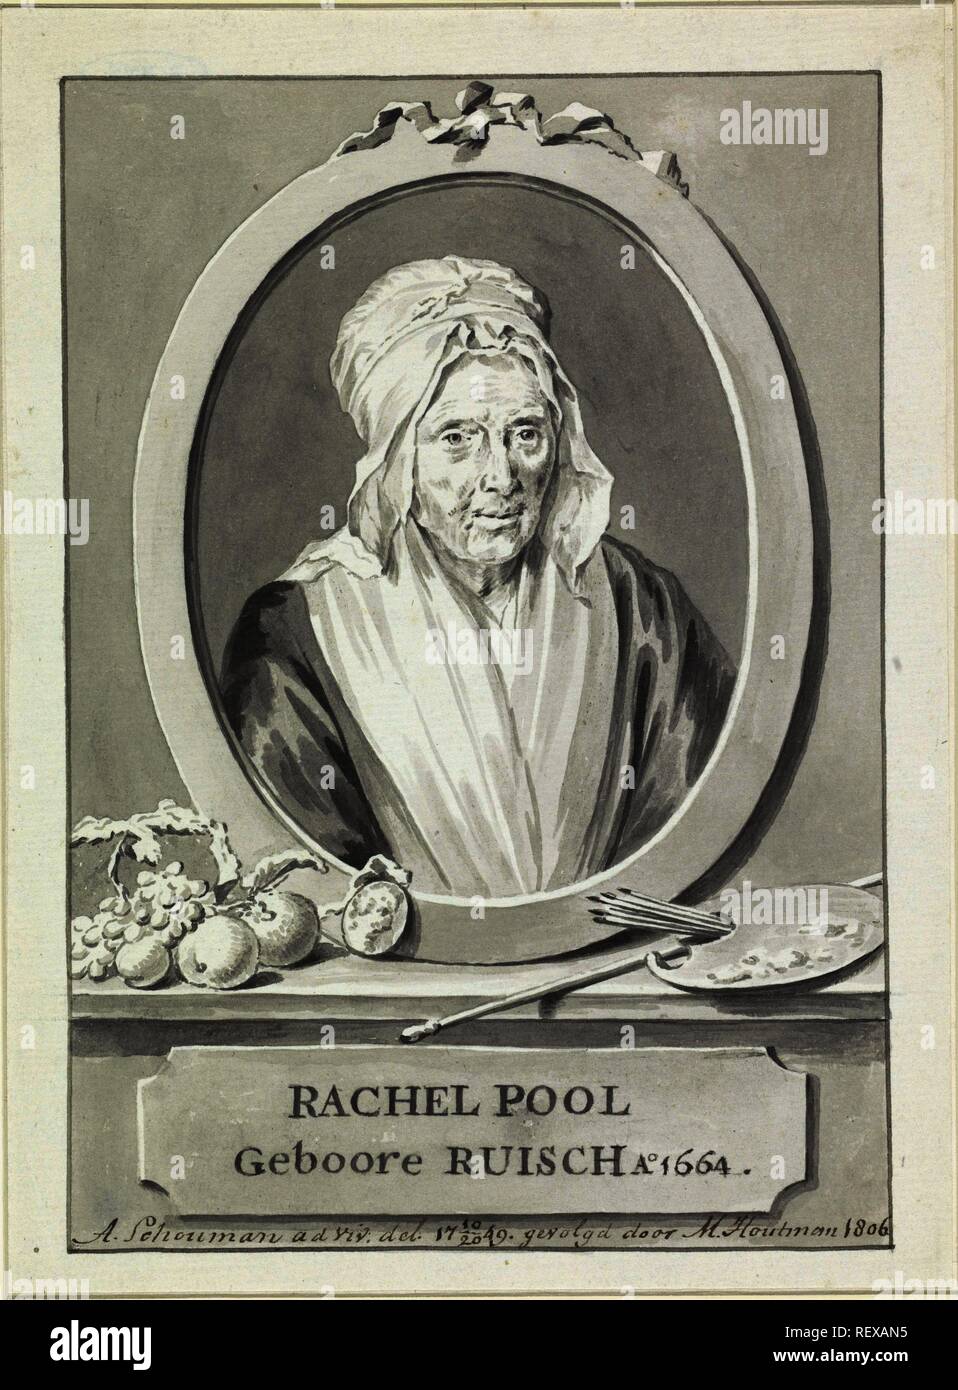 Portrait of Rachel Pool-Ruysch. Draughtsman: Marten Houtman. Intermediary draughtsman: Aert Schouman. Dating: 1806. Measurements: h 182 mm × w 135 mm. Museum: Rijksmuseum, Amsterdam. Stock Photo